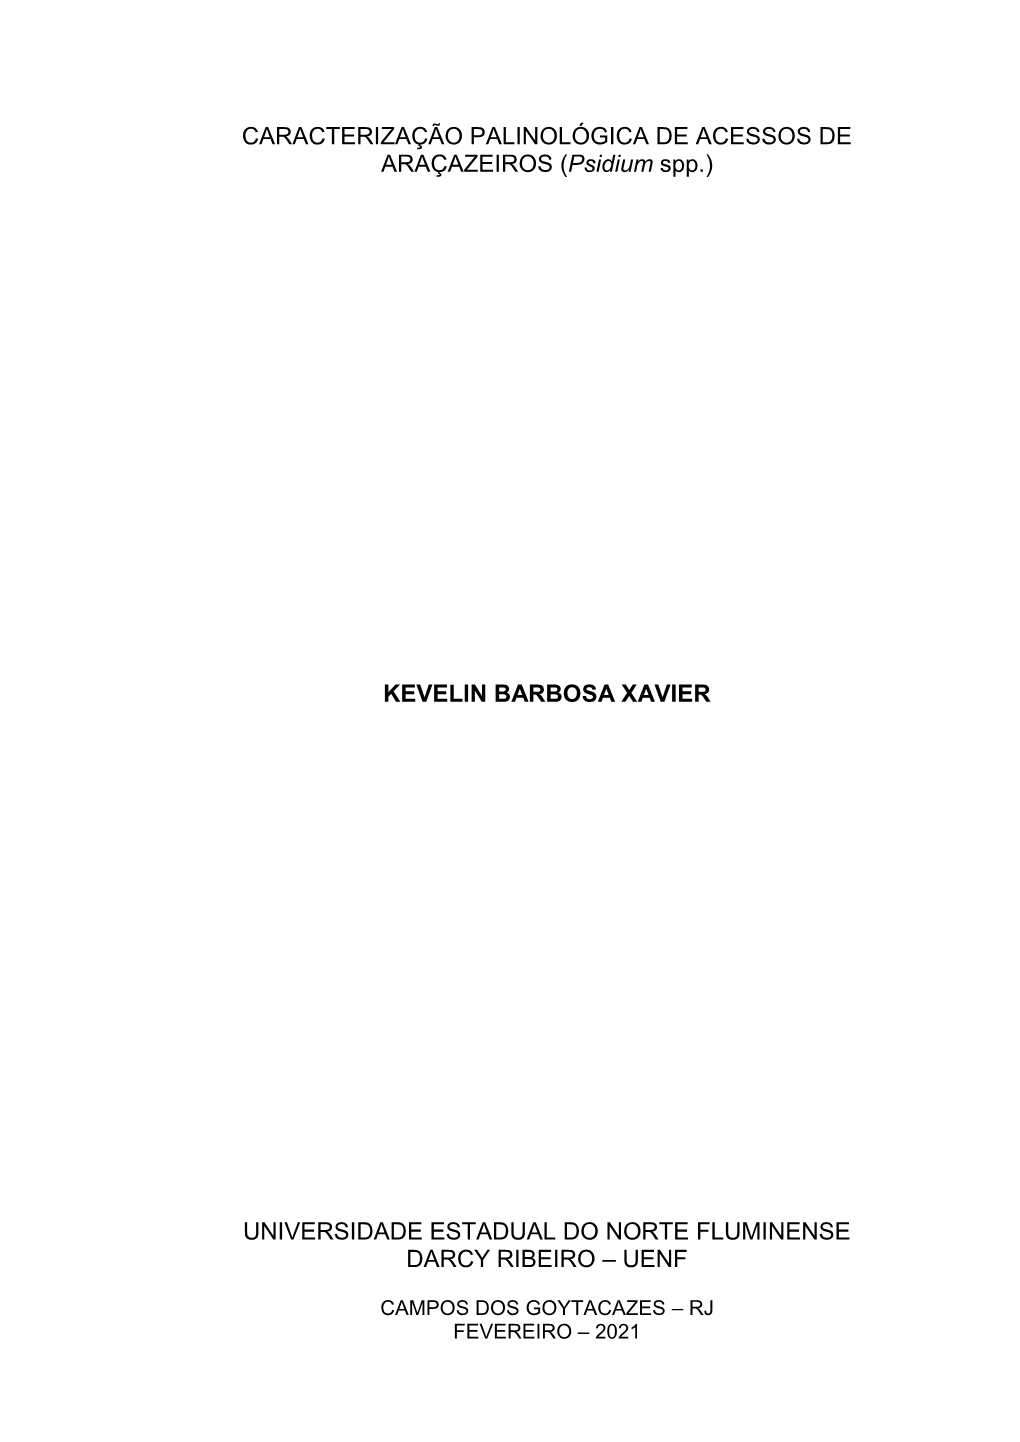 (Psidium Spp.) KEVELIN BARBOSA XAVIER UNIVERSIDADE